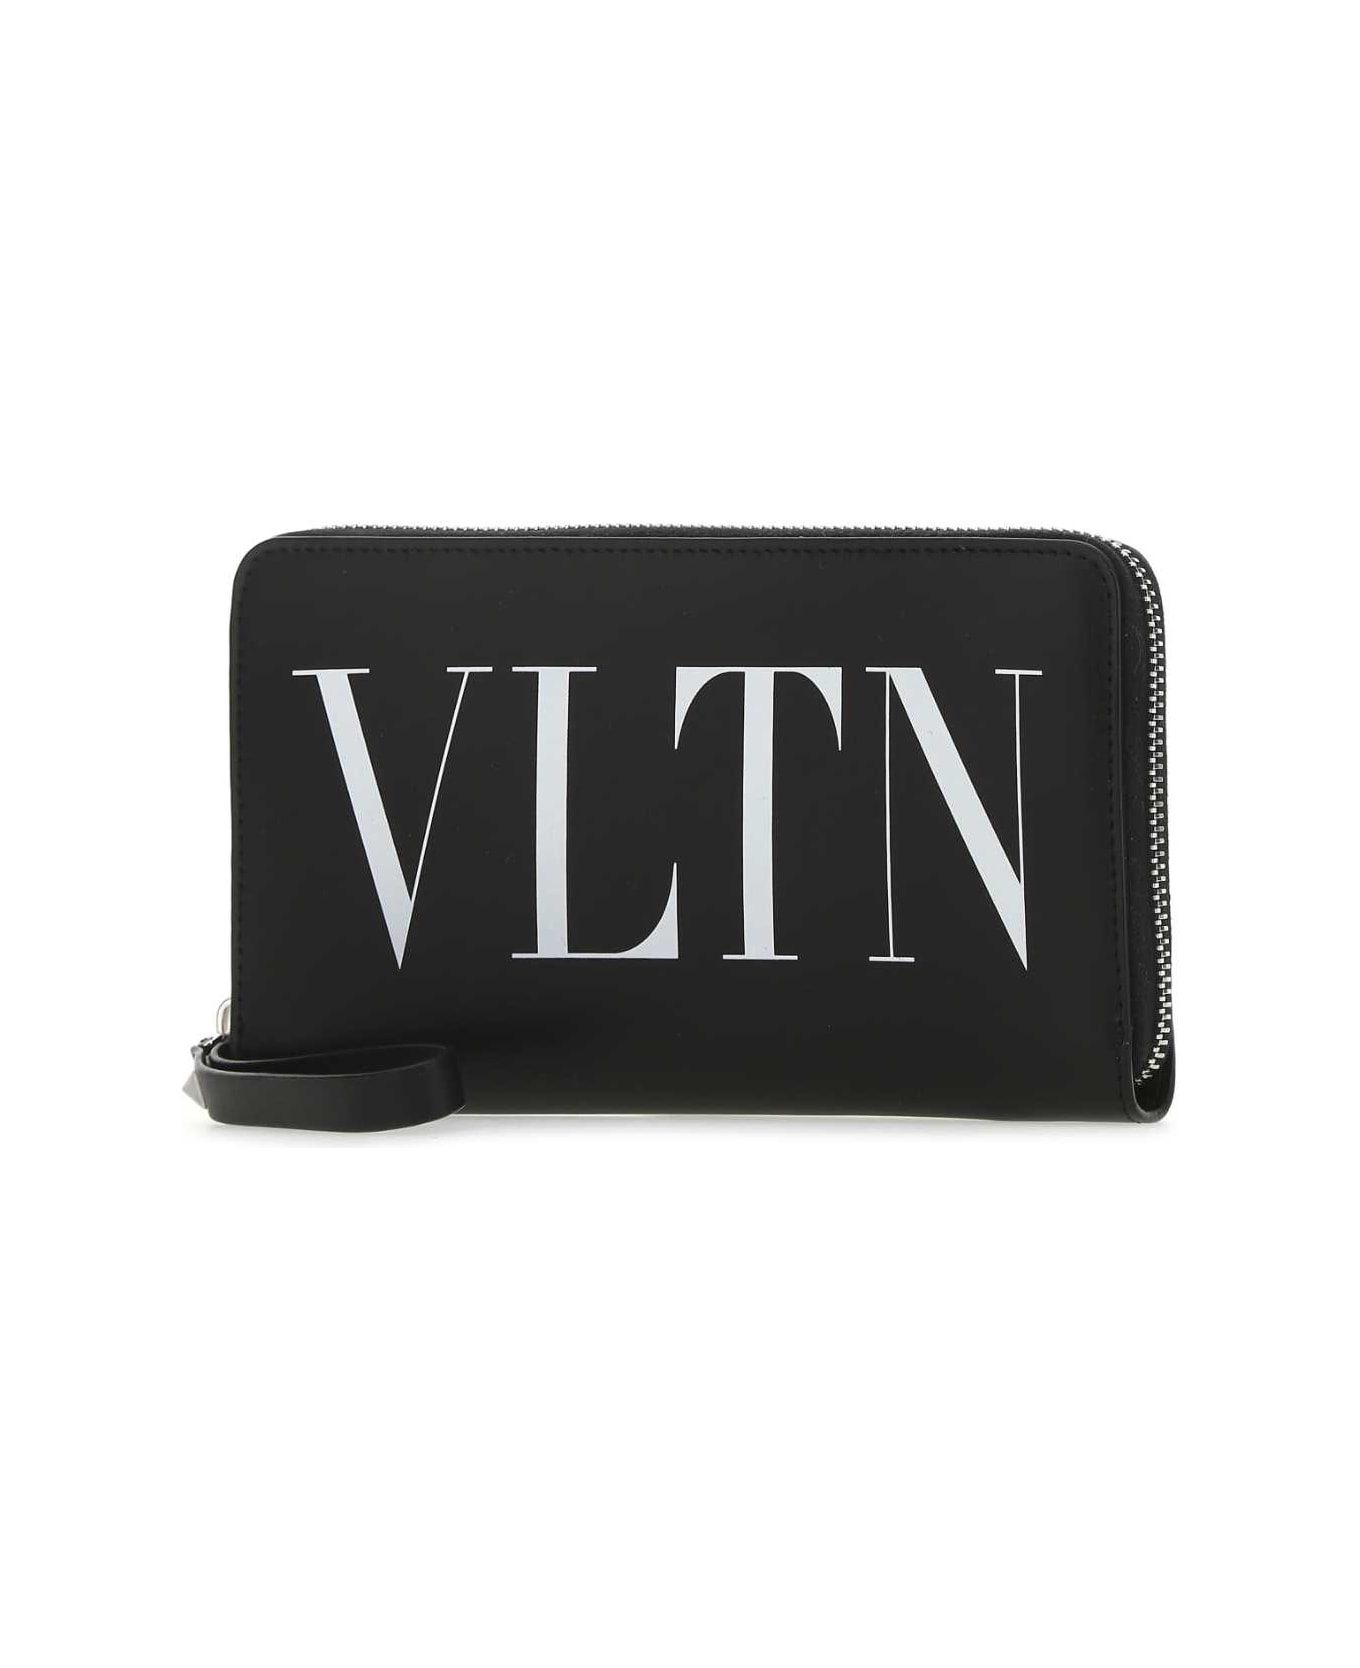 Valentino Garavani Black Leather Vltn Wallet - NERBIA 財布